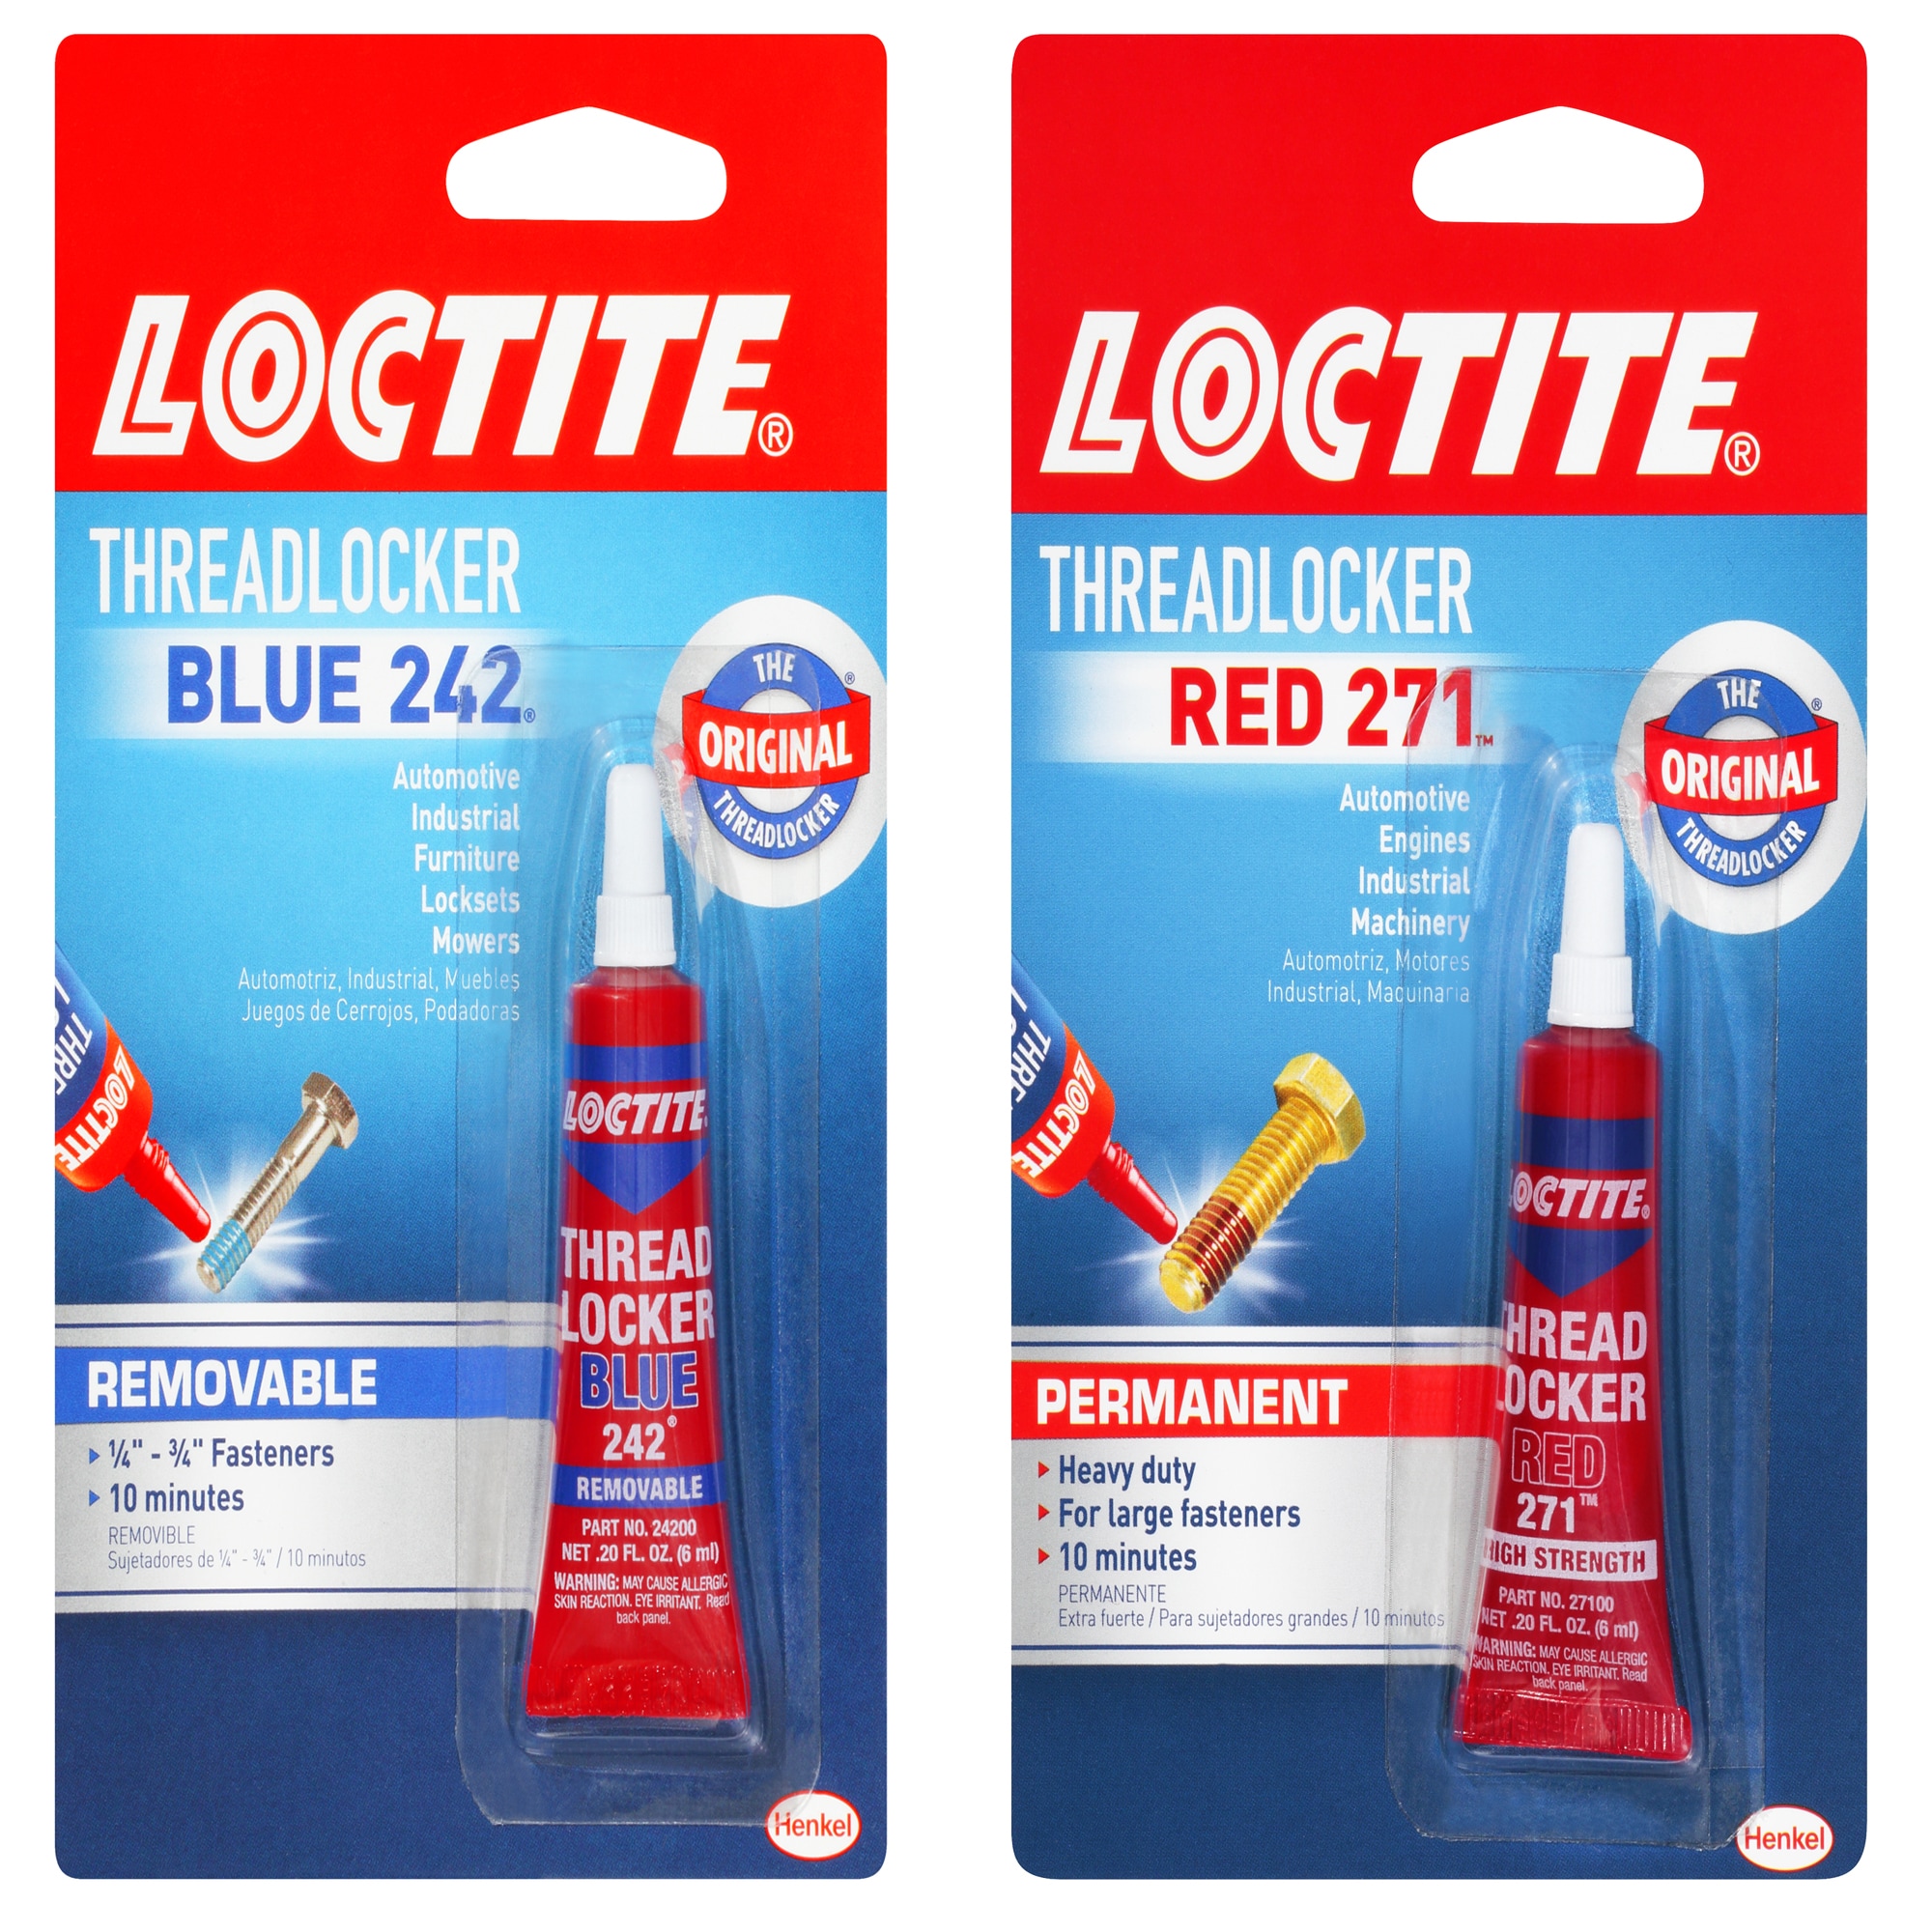 LOCTITE Threadlocker Blue 242 1 Tube with Threadlocker Red 271, 1 Tube